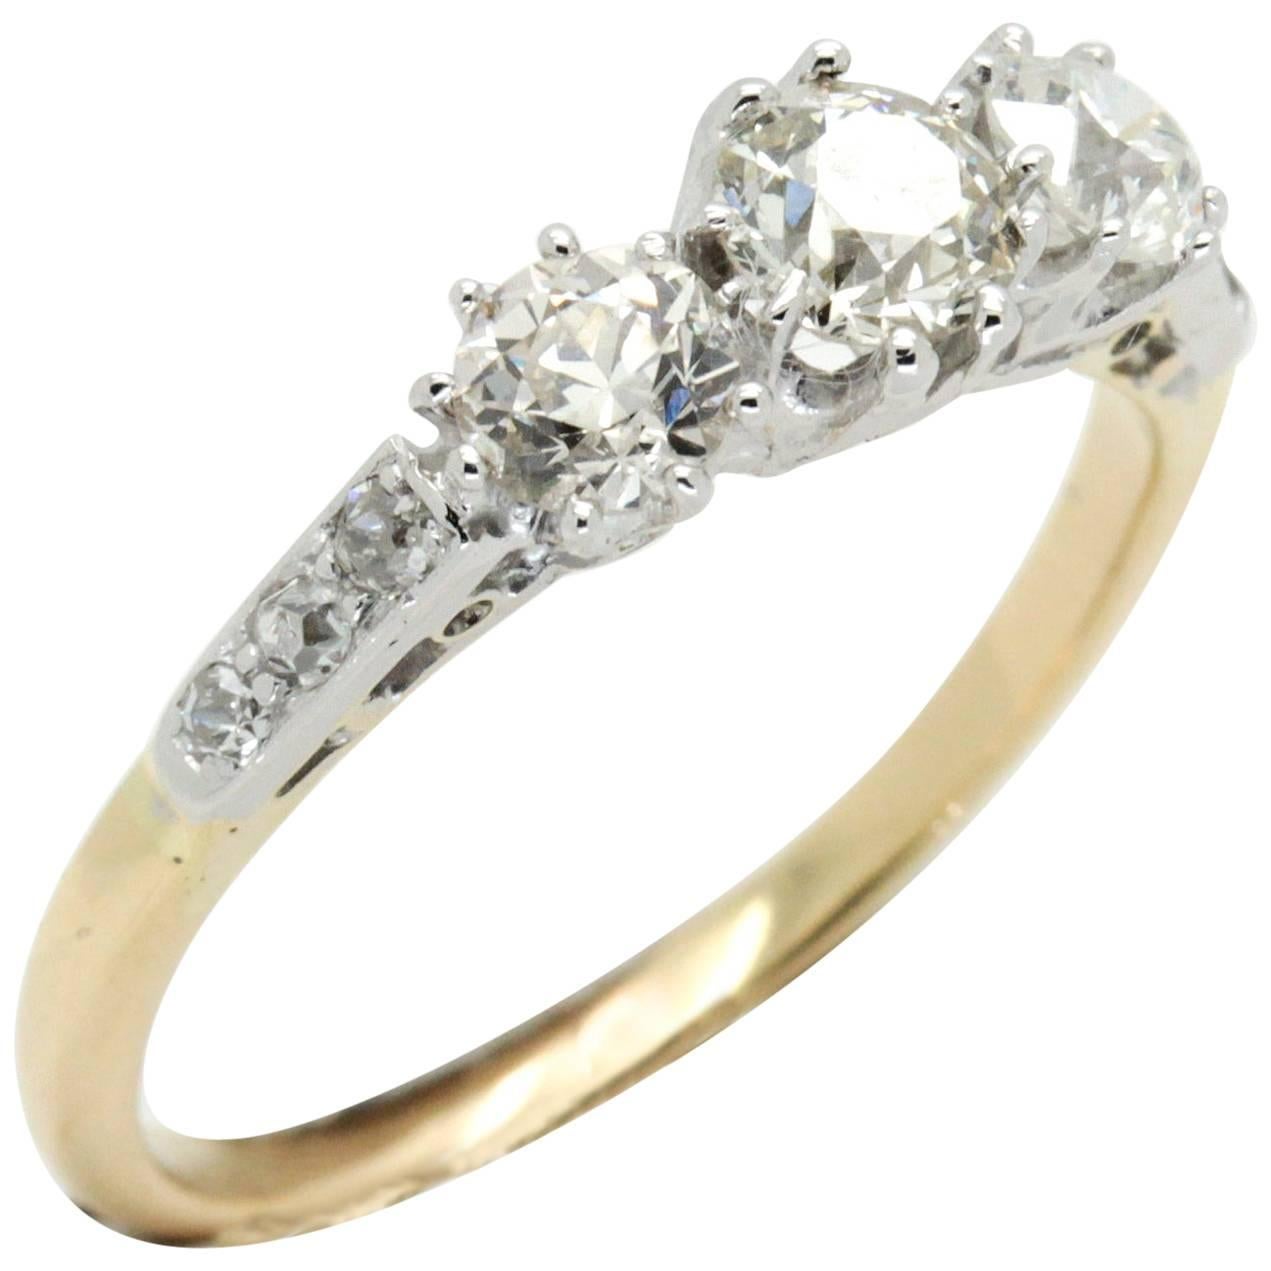 Art Deco Three-Diamond Engagement or Cocktail Ring